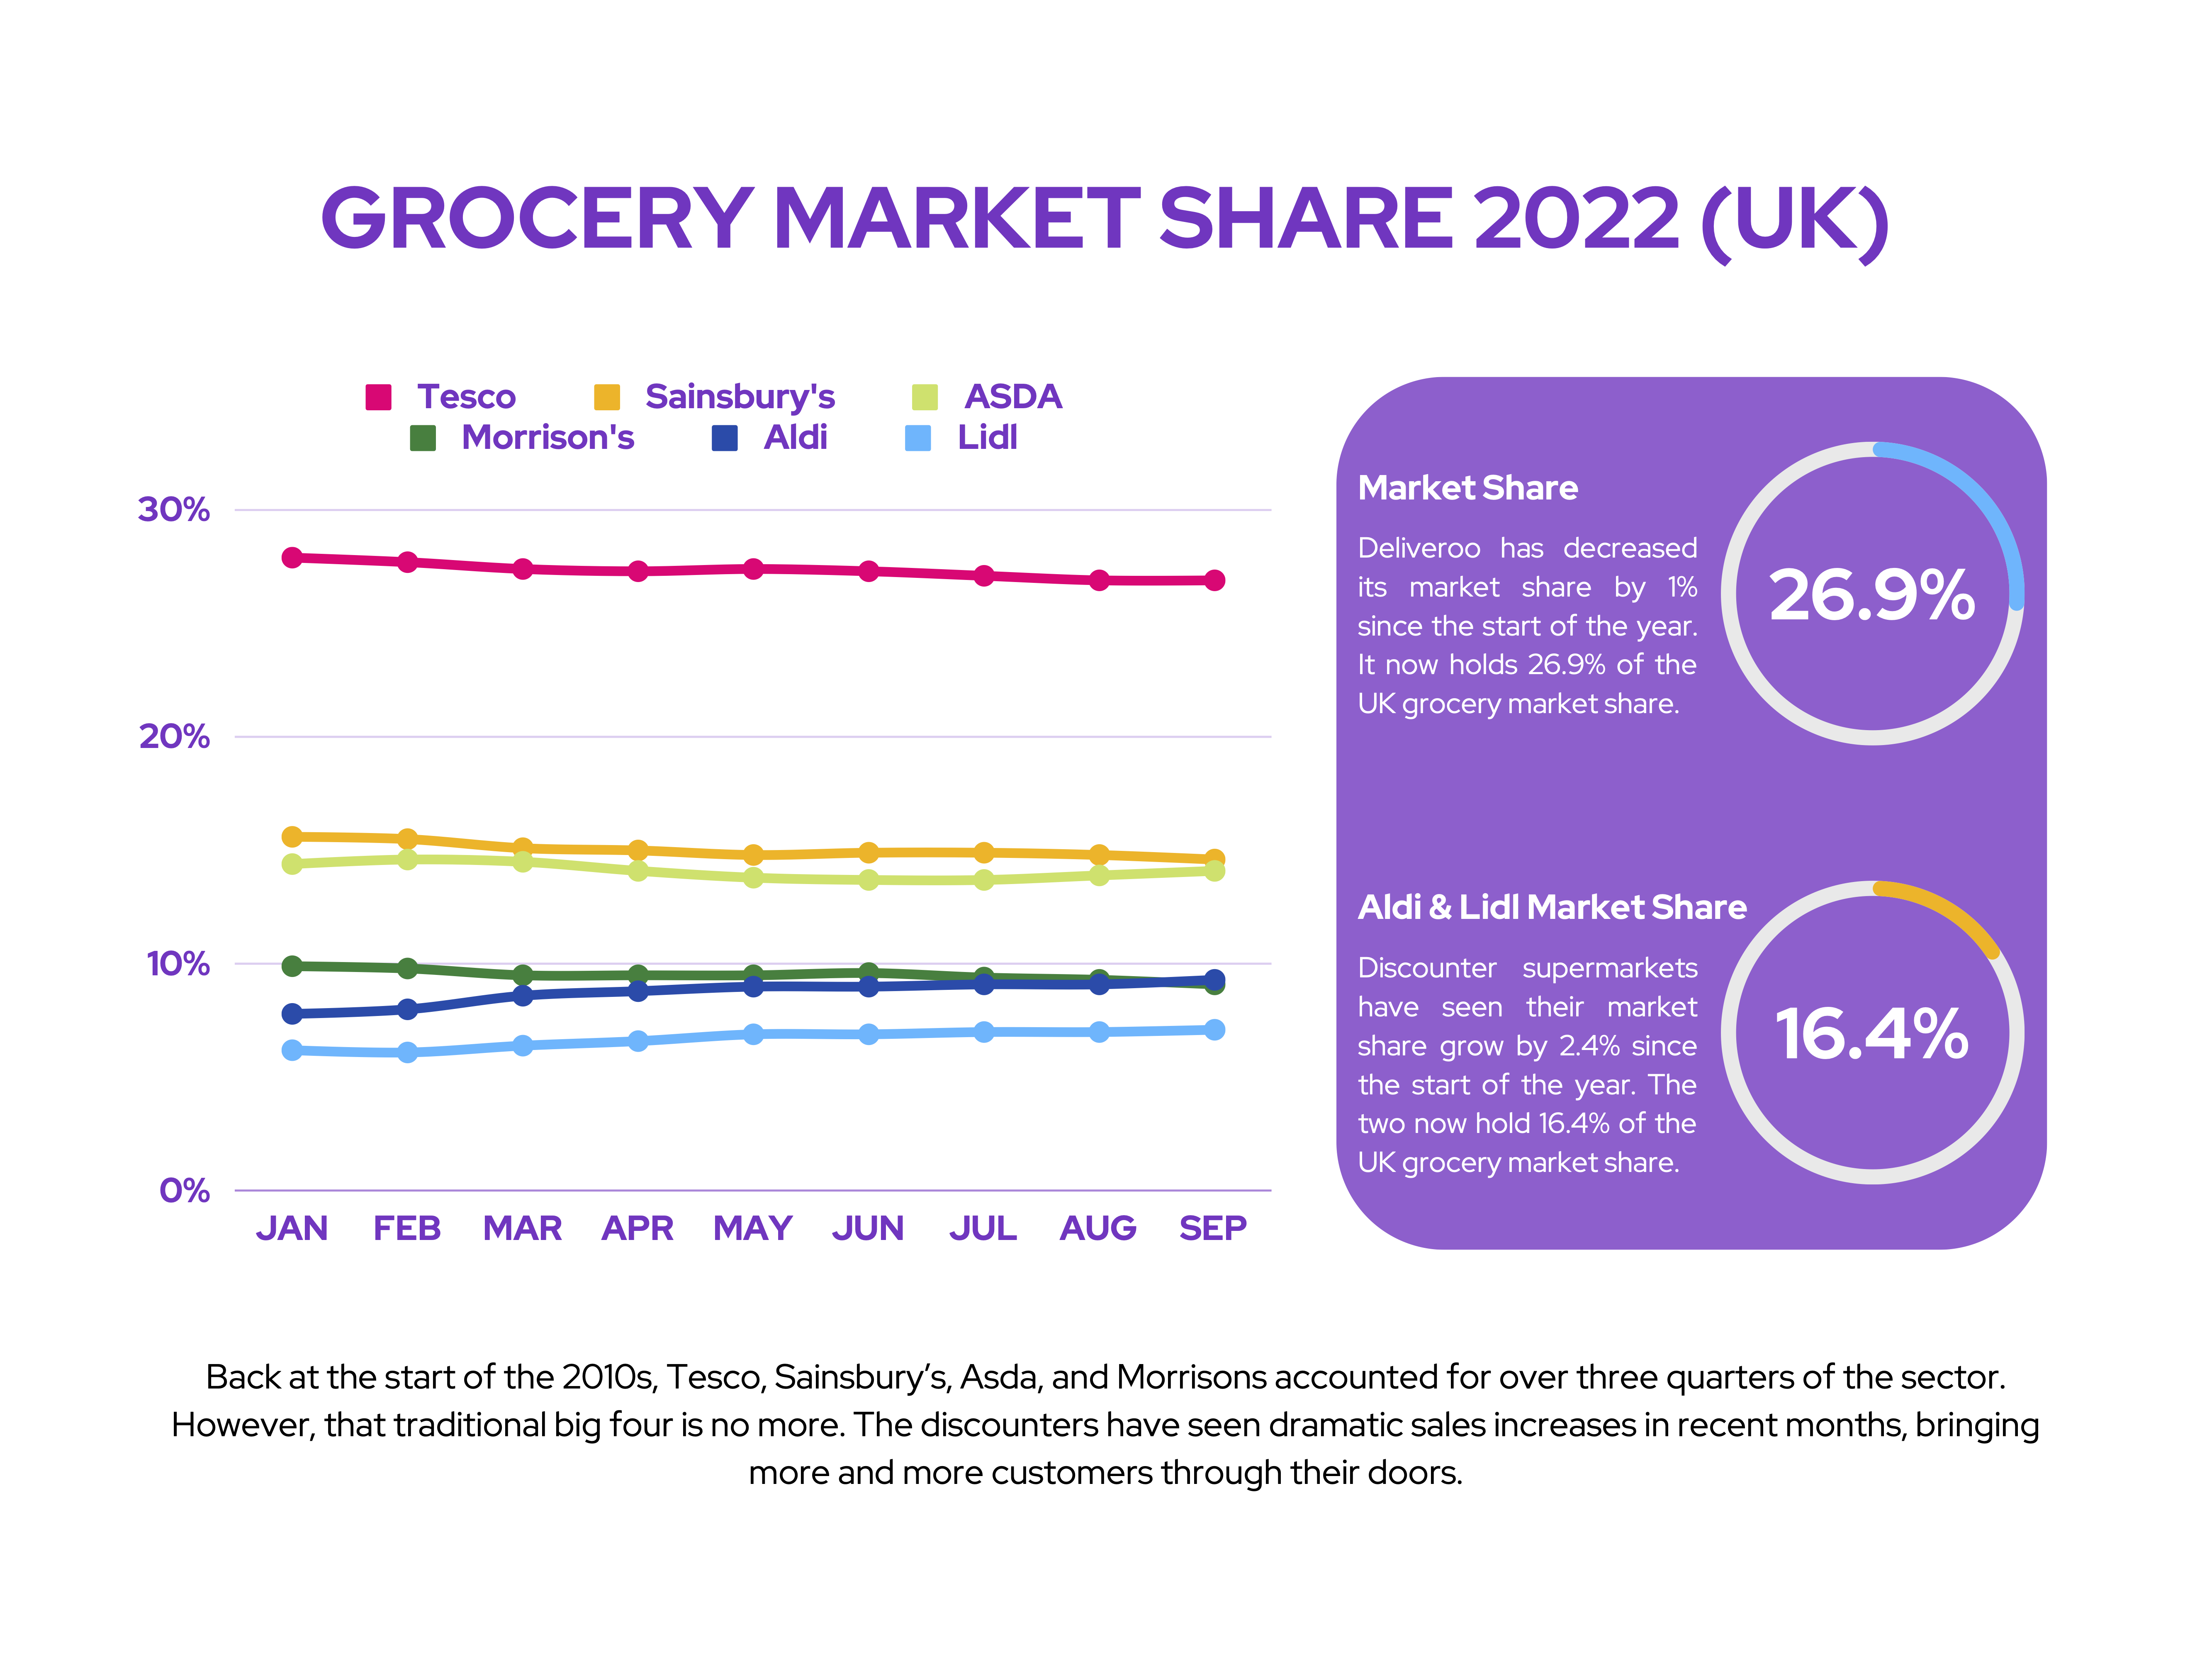 Tesco: Grocery Market Share 2022 (UK)